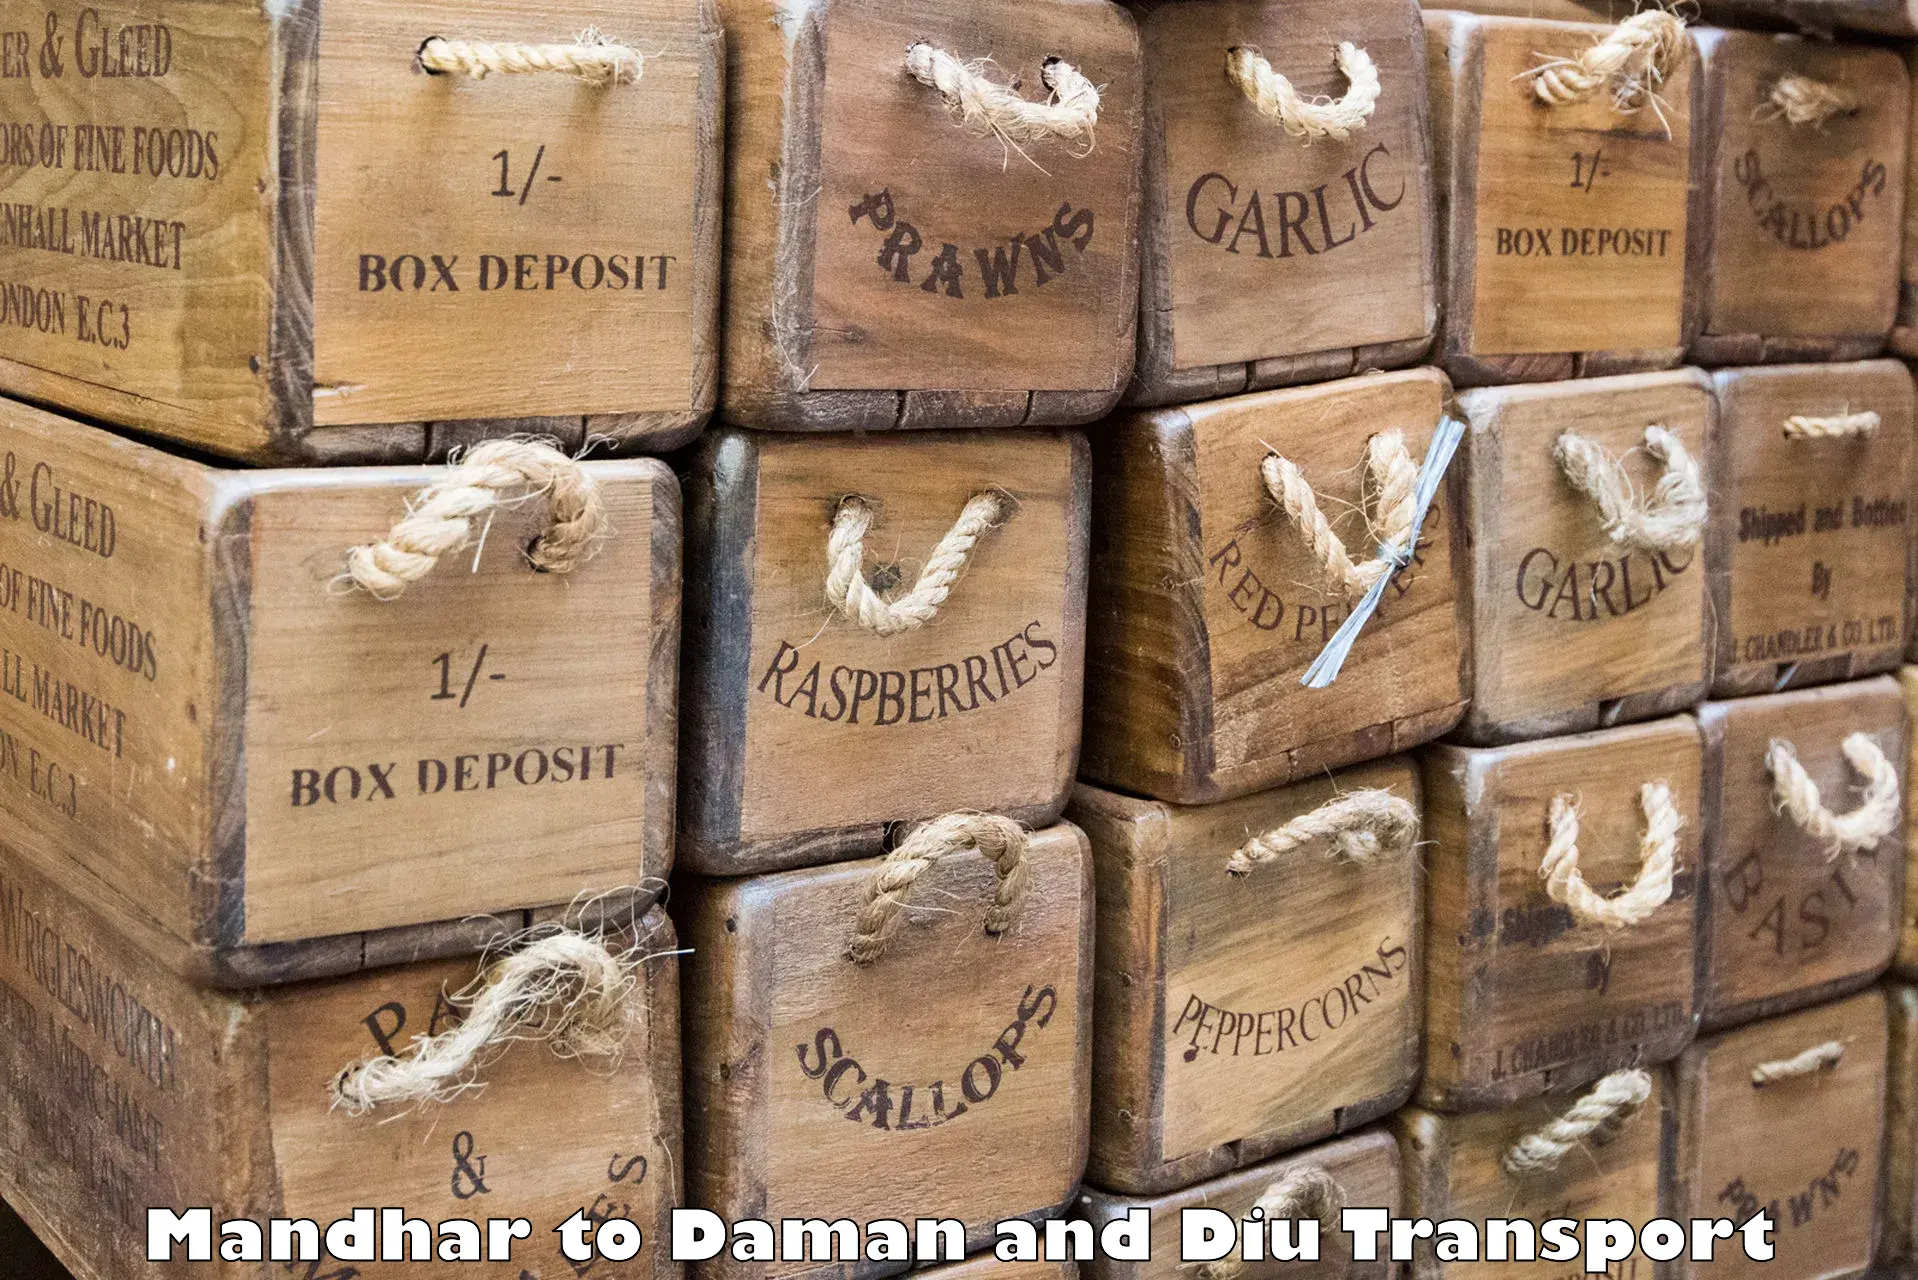 Shipping partner Mandhar to Daman and Diu